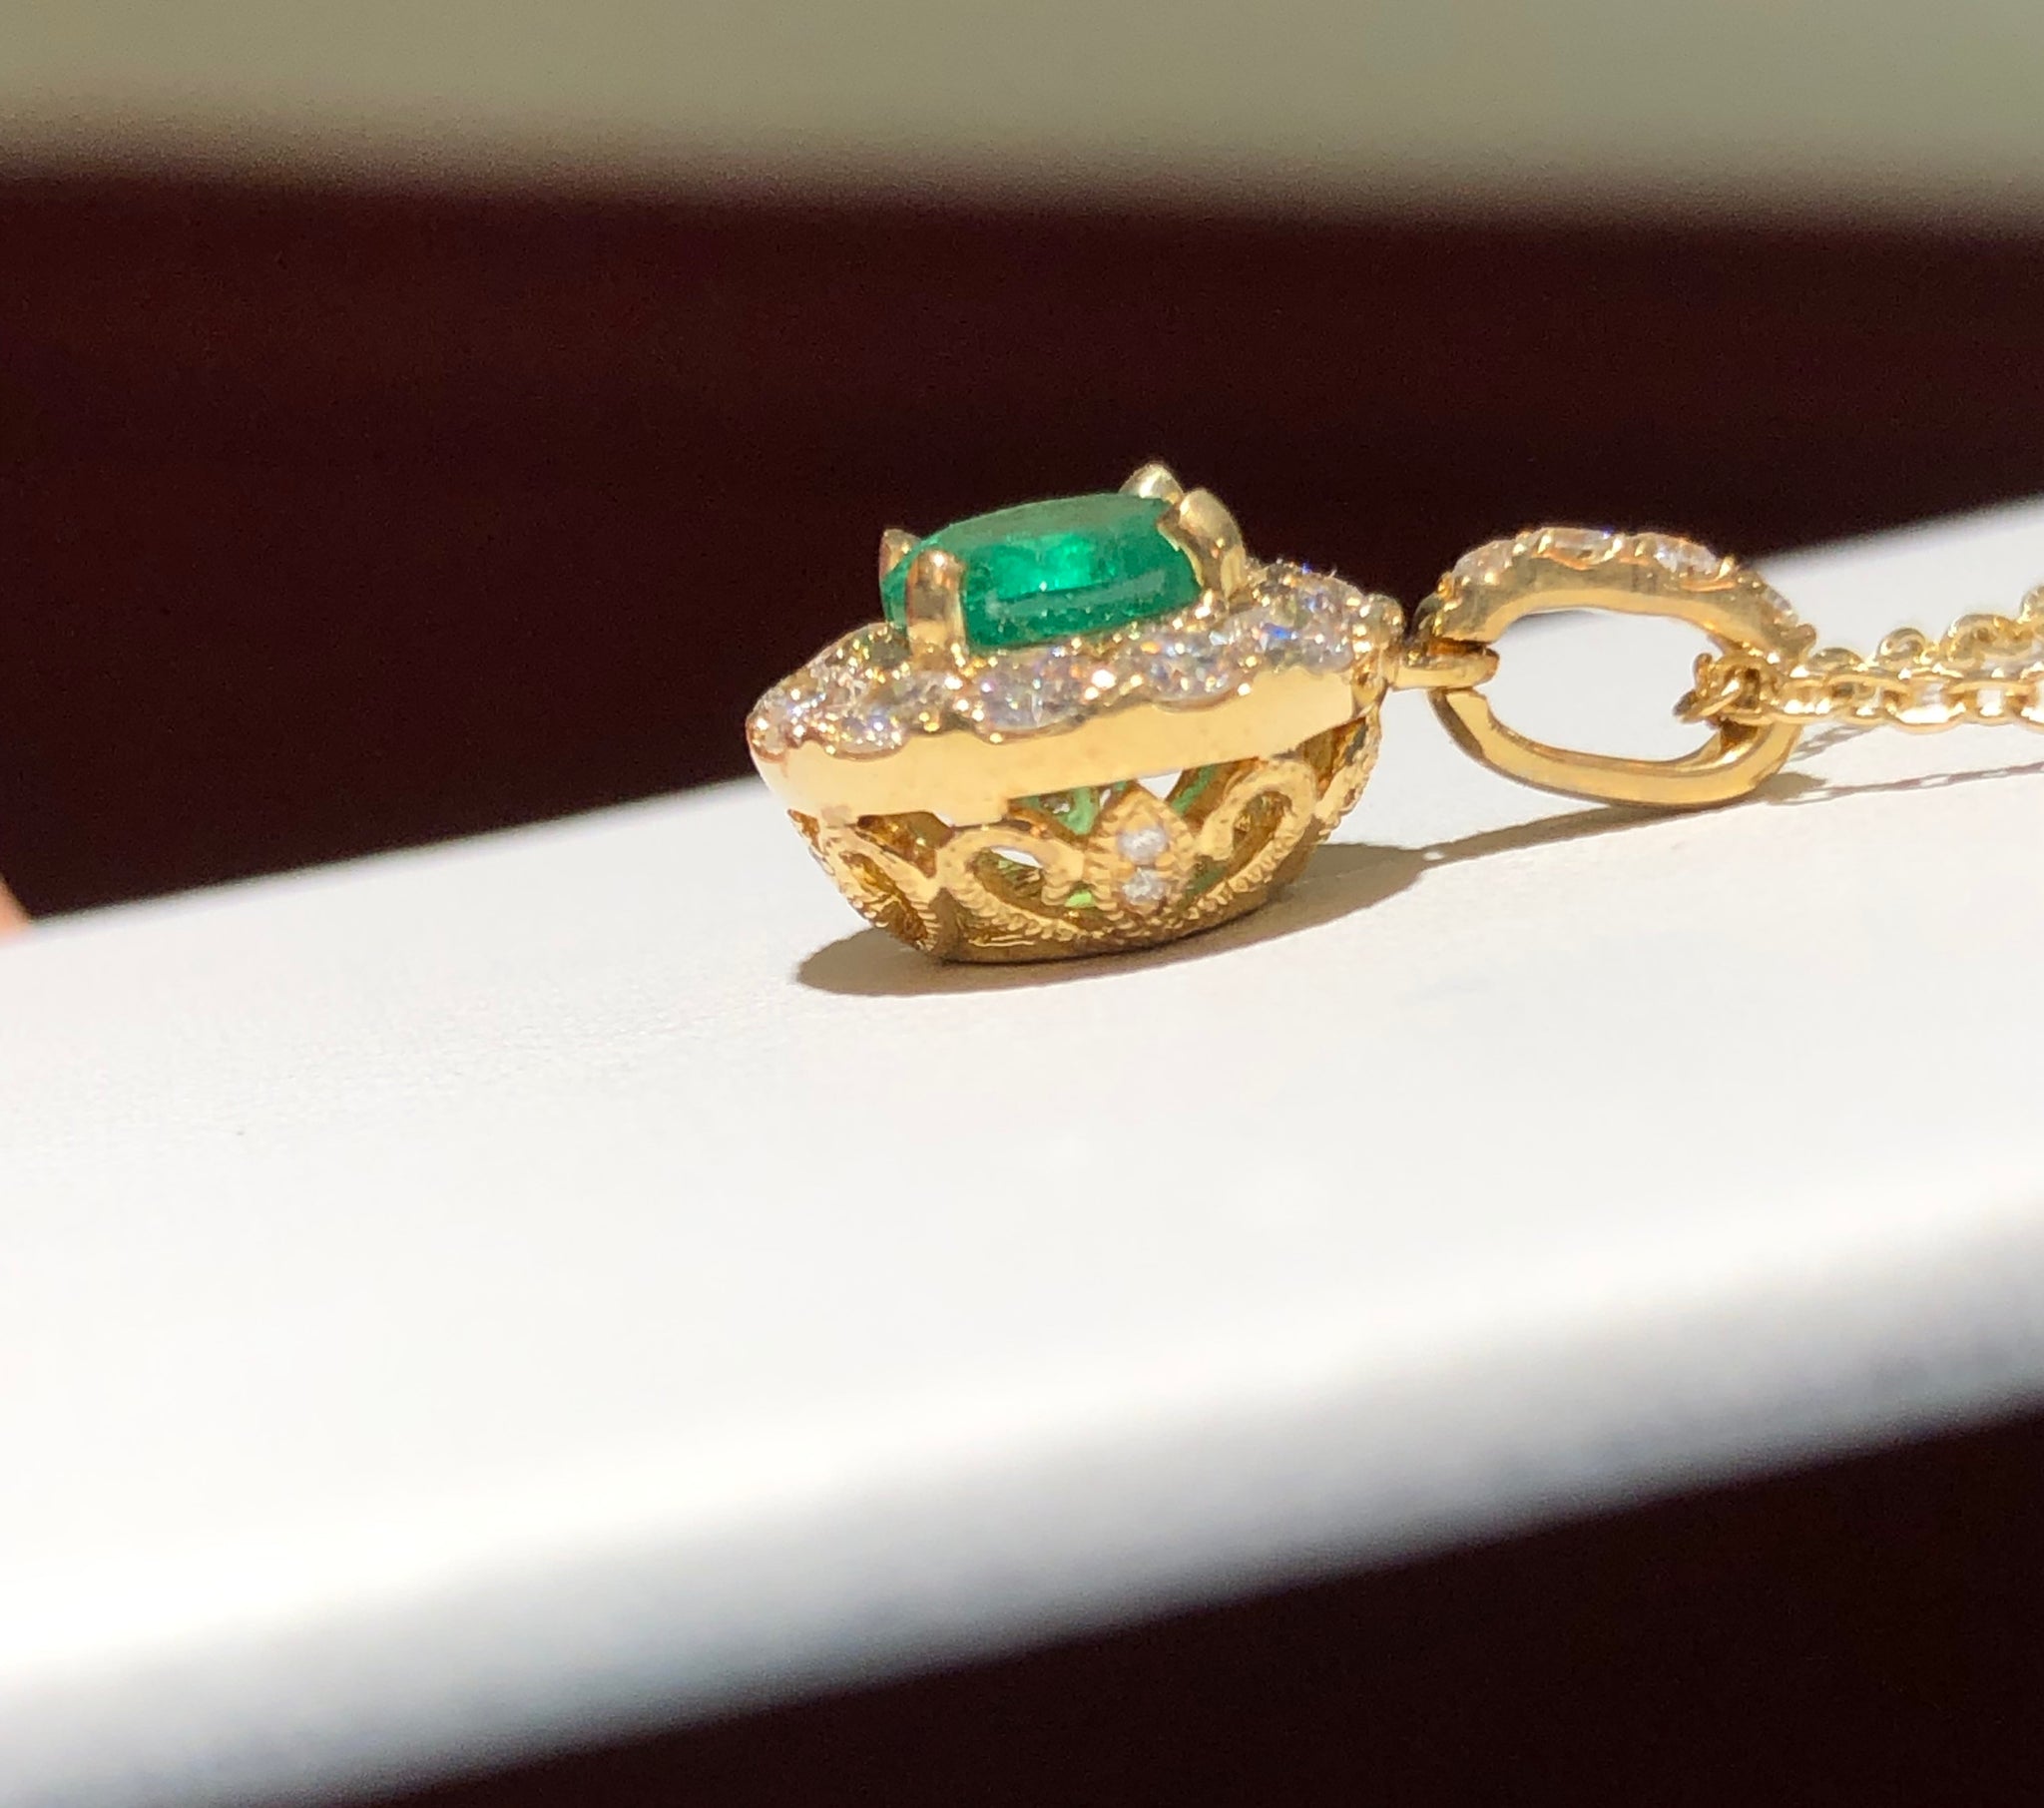 Emerald & Diamond Pendant Necklace Yellow Gold